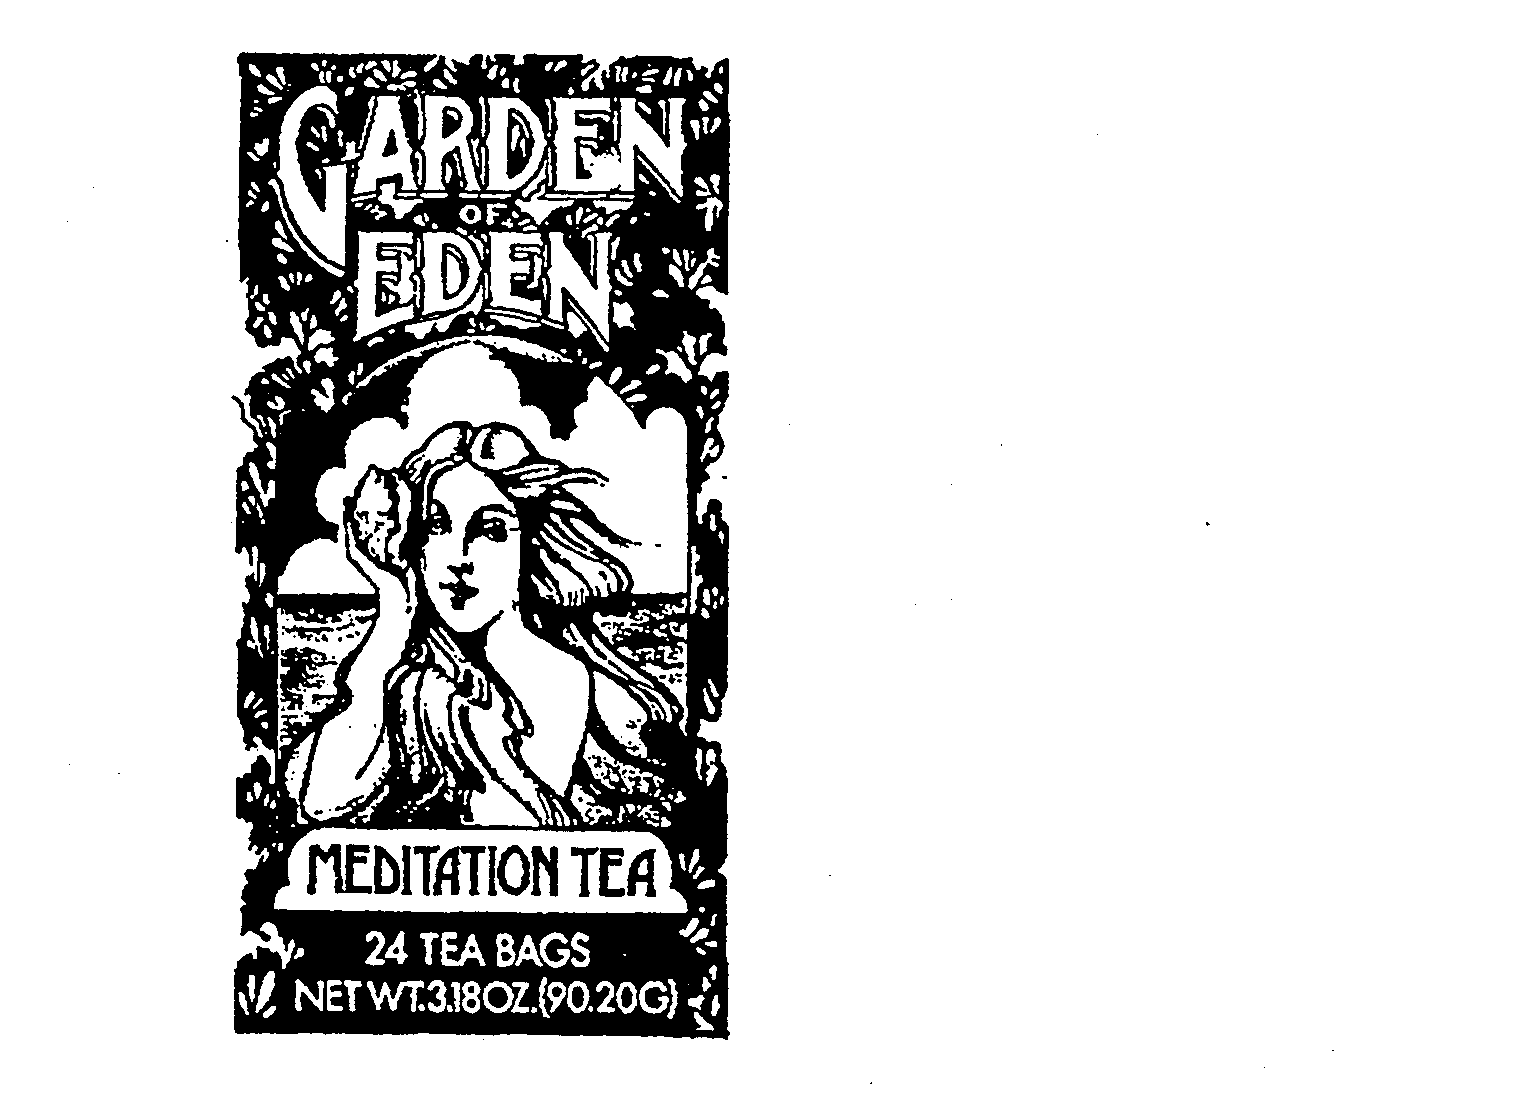  GARDEN OF EDEN MEDITATION TEA 24 TEA BAGS NET WT.3.18OZ.(90.20G)